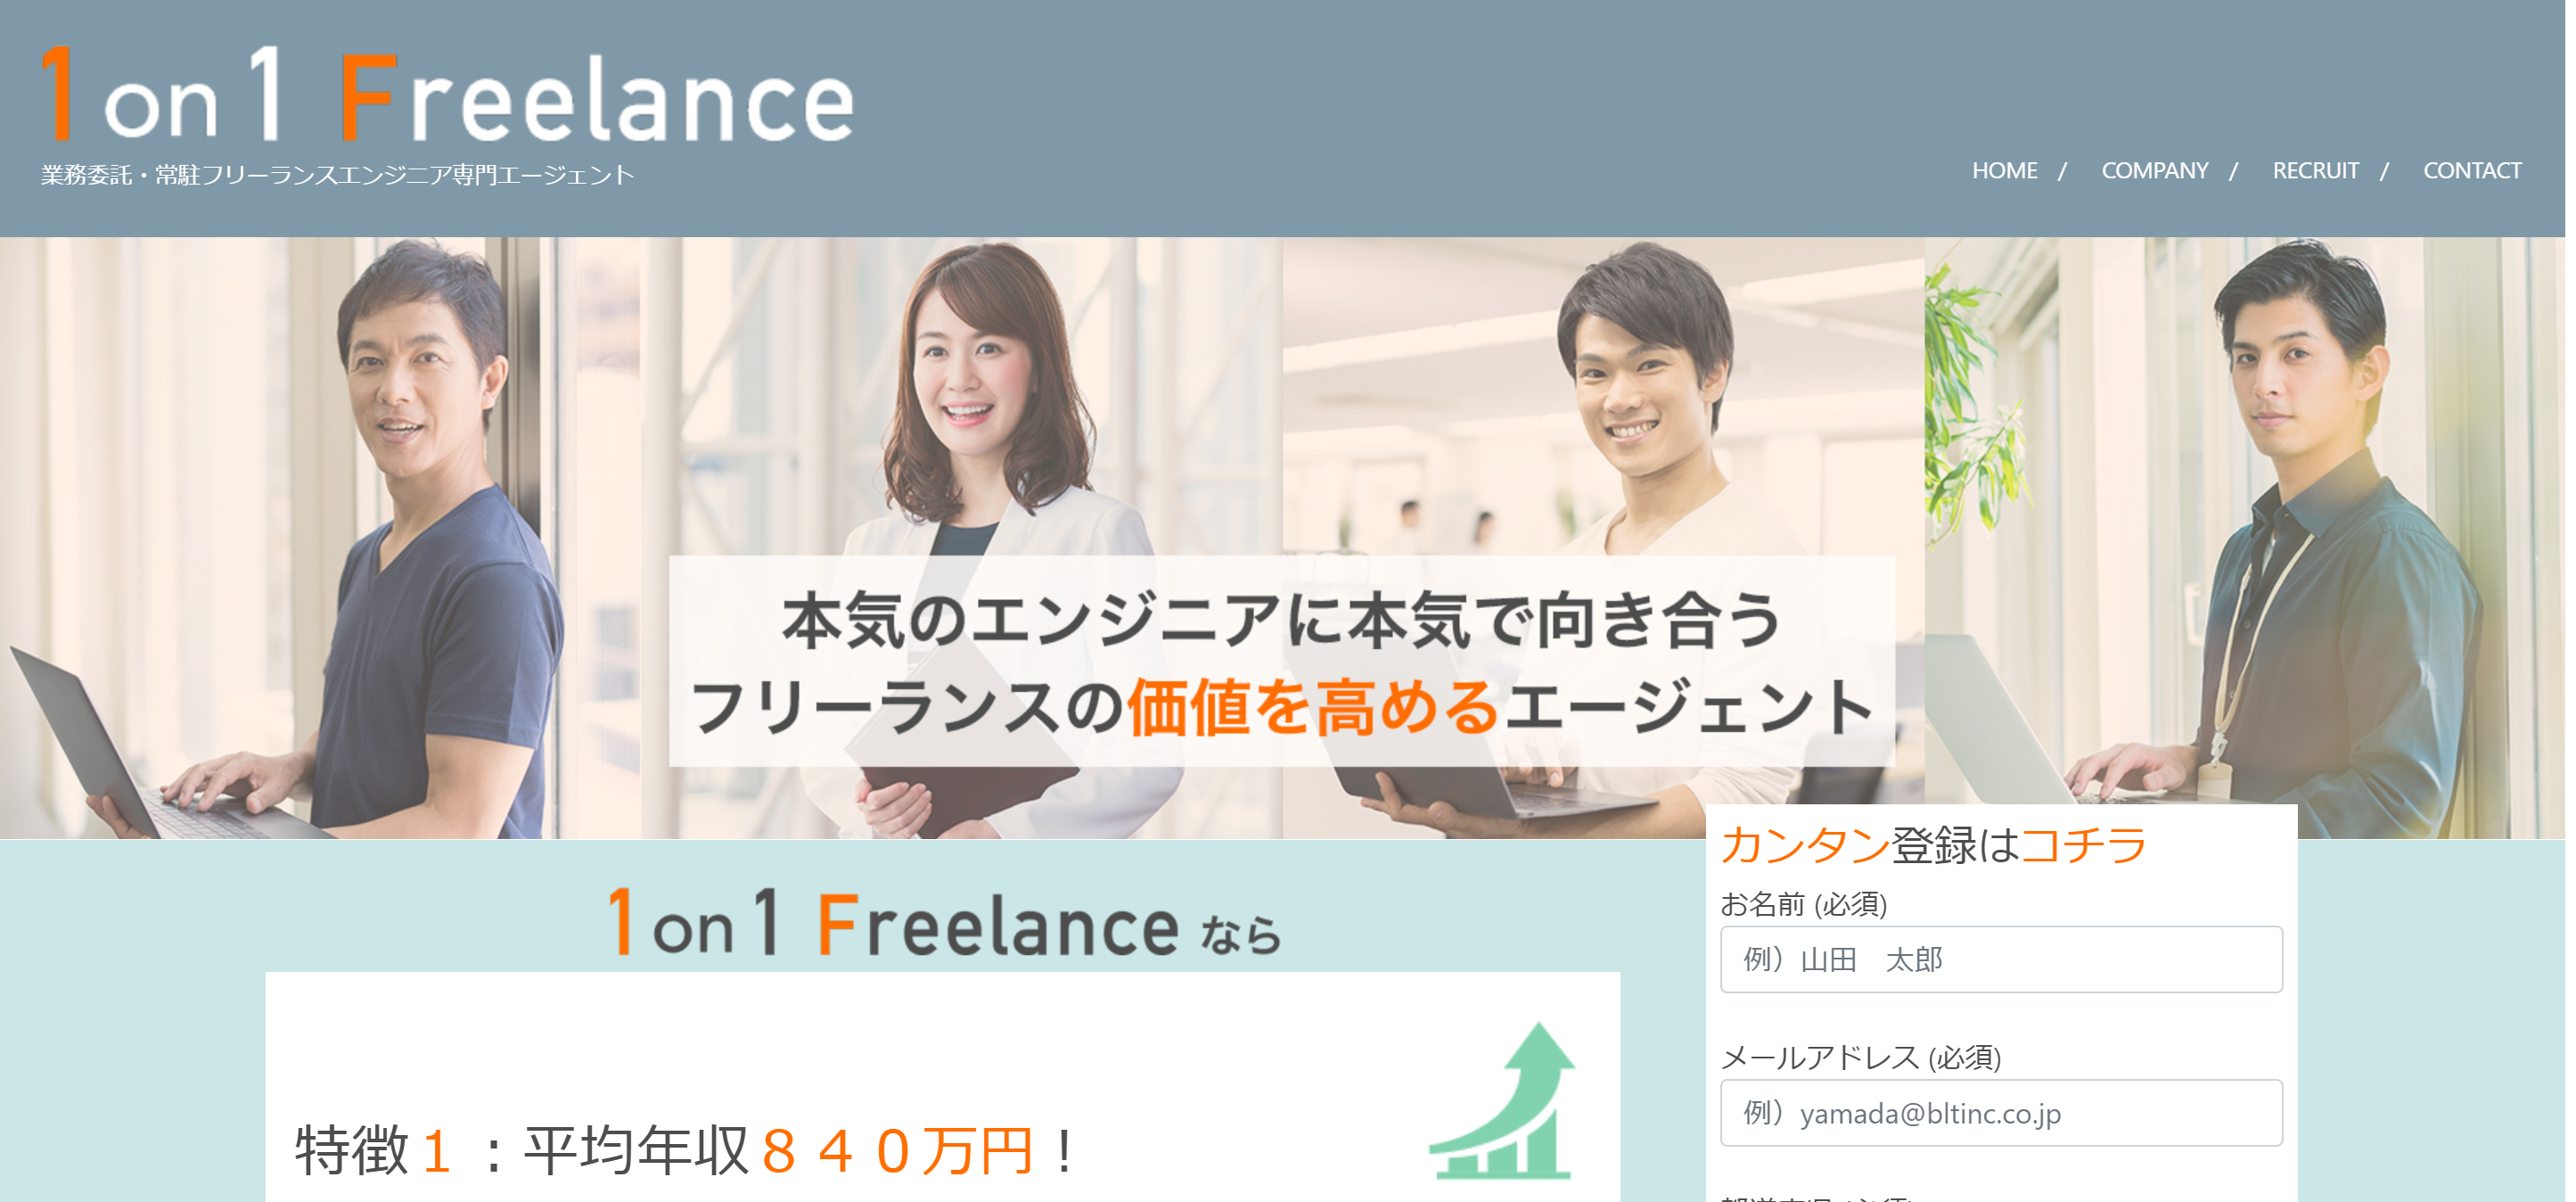 1on1 freelance